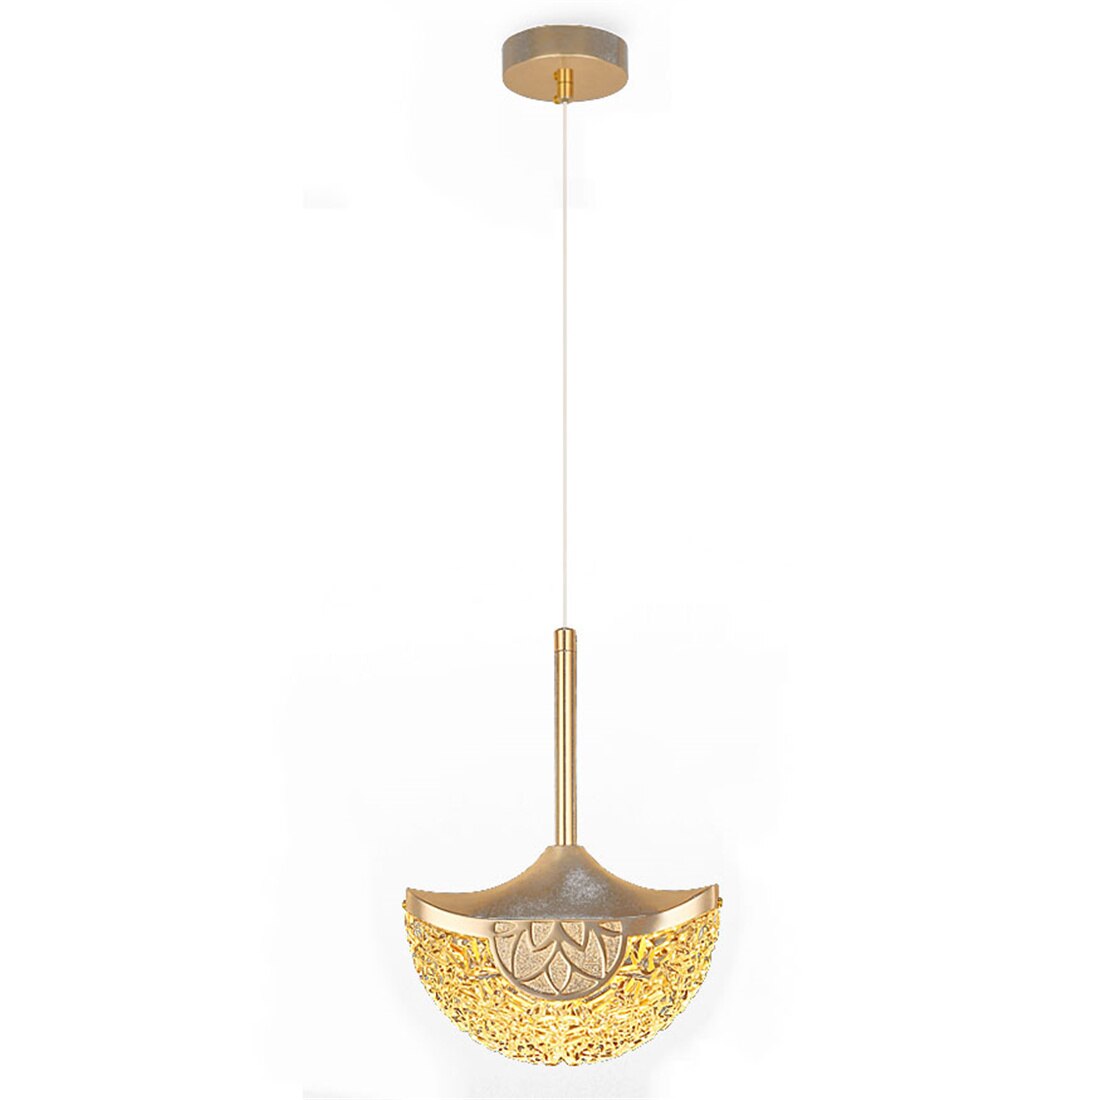 Postmodern Gold Acrylic Led Pendant Lights Hotel Loft Bedroom Dining Table Bedside livingroom single head